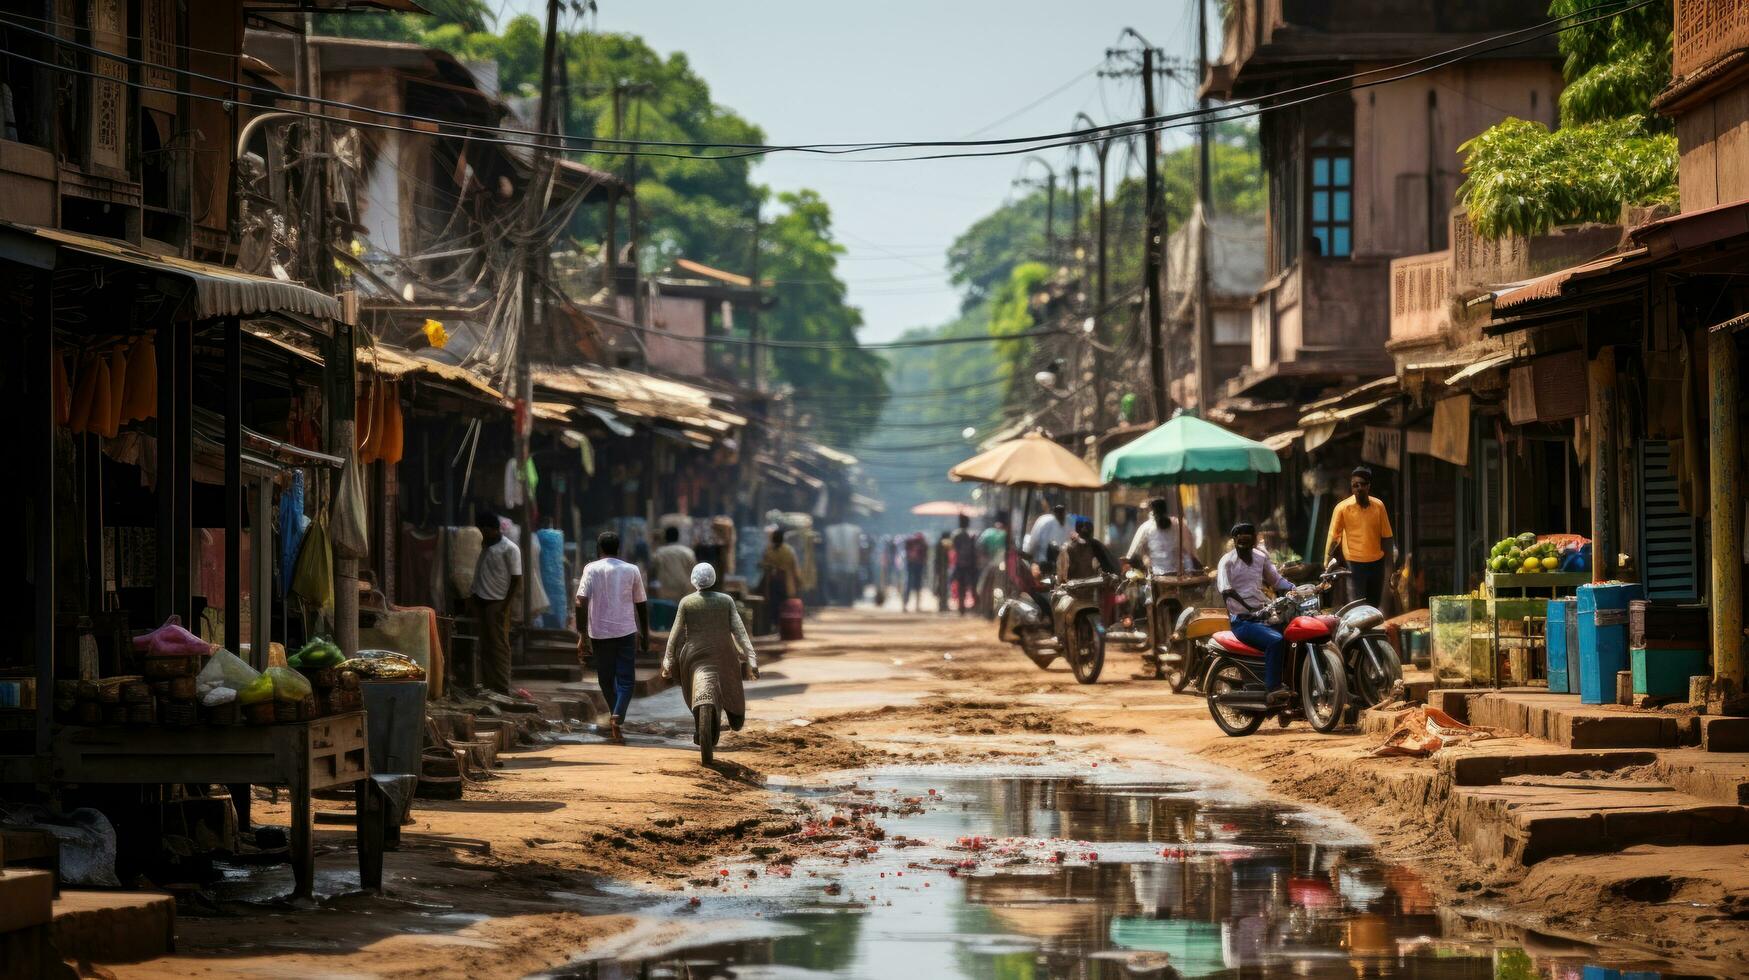 stad indisk marknadsföra bhopal, madhya Pradesh, Indien. foto